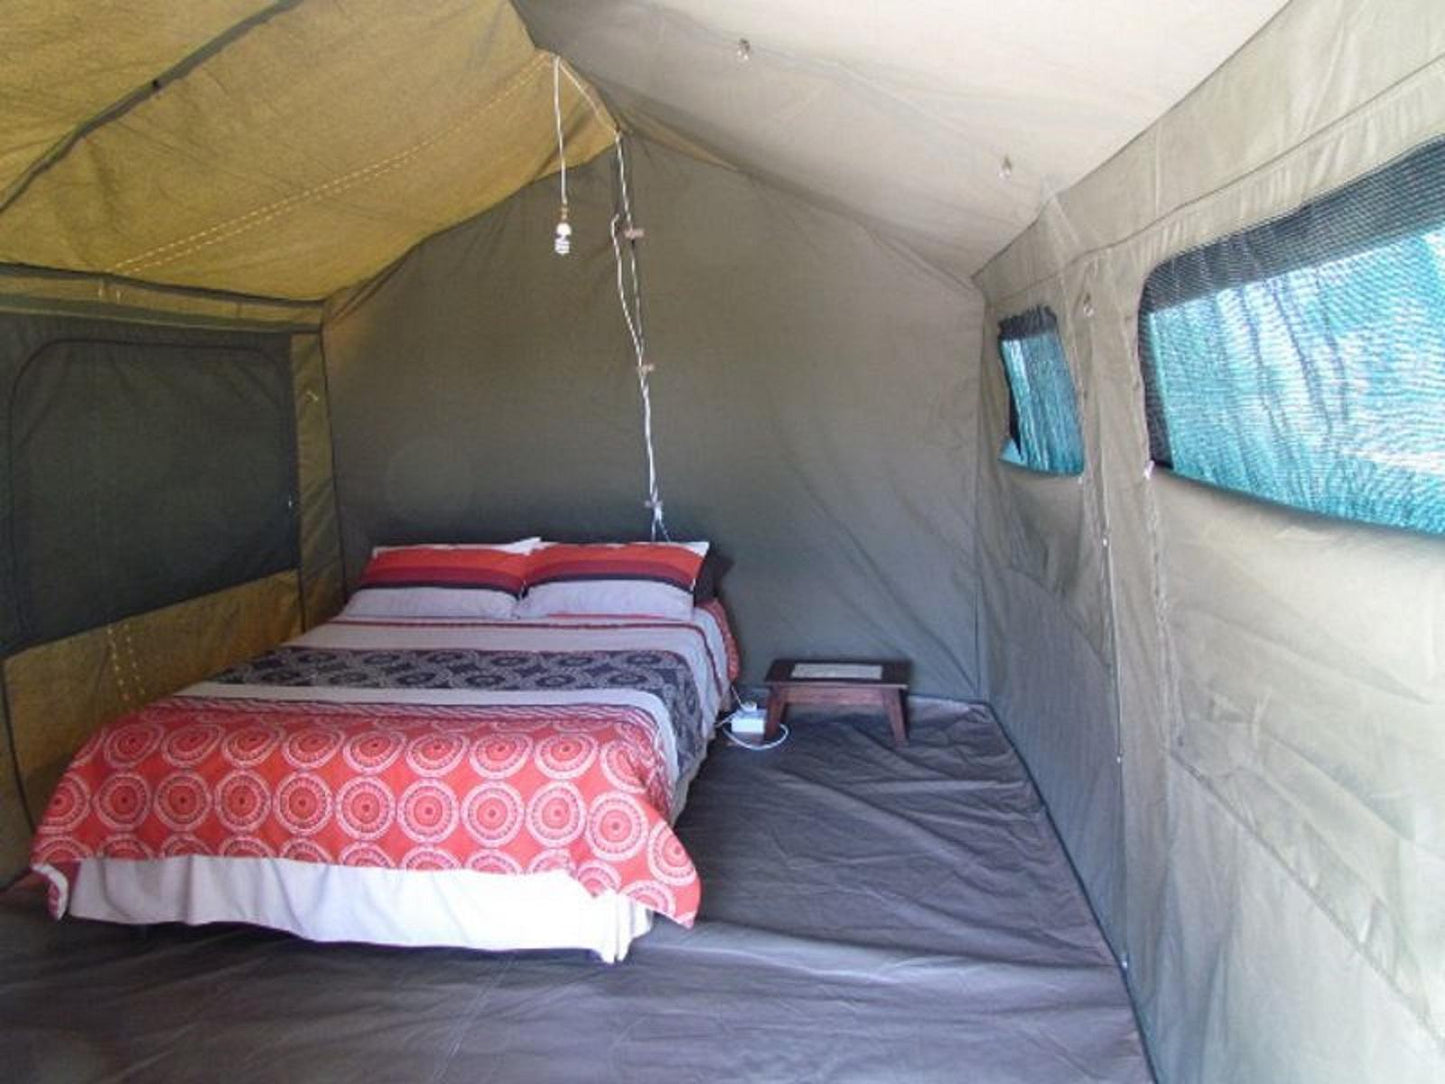 Tent 4 @ Skulpieskraal Tented Lodge And Rooi Spinnekop Restaurant